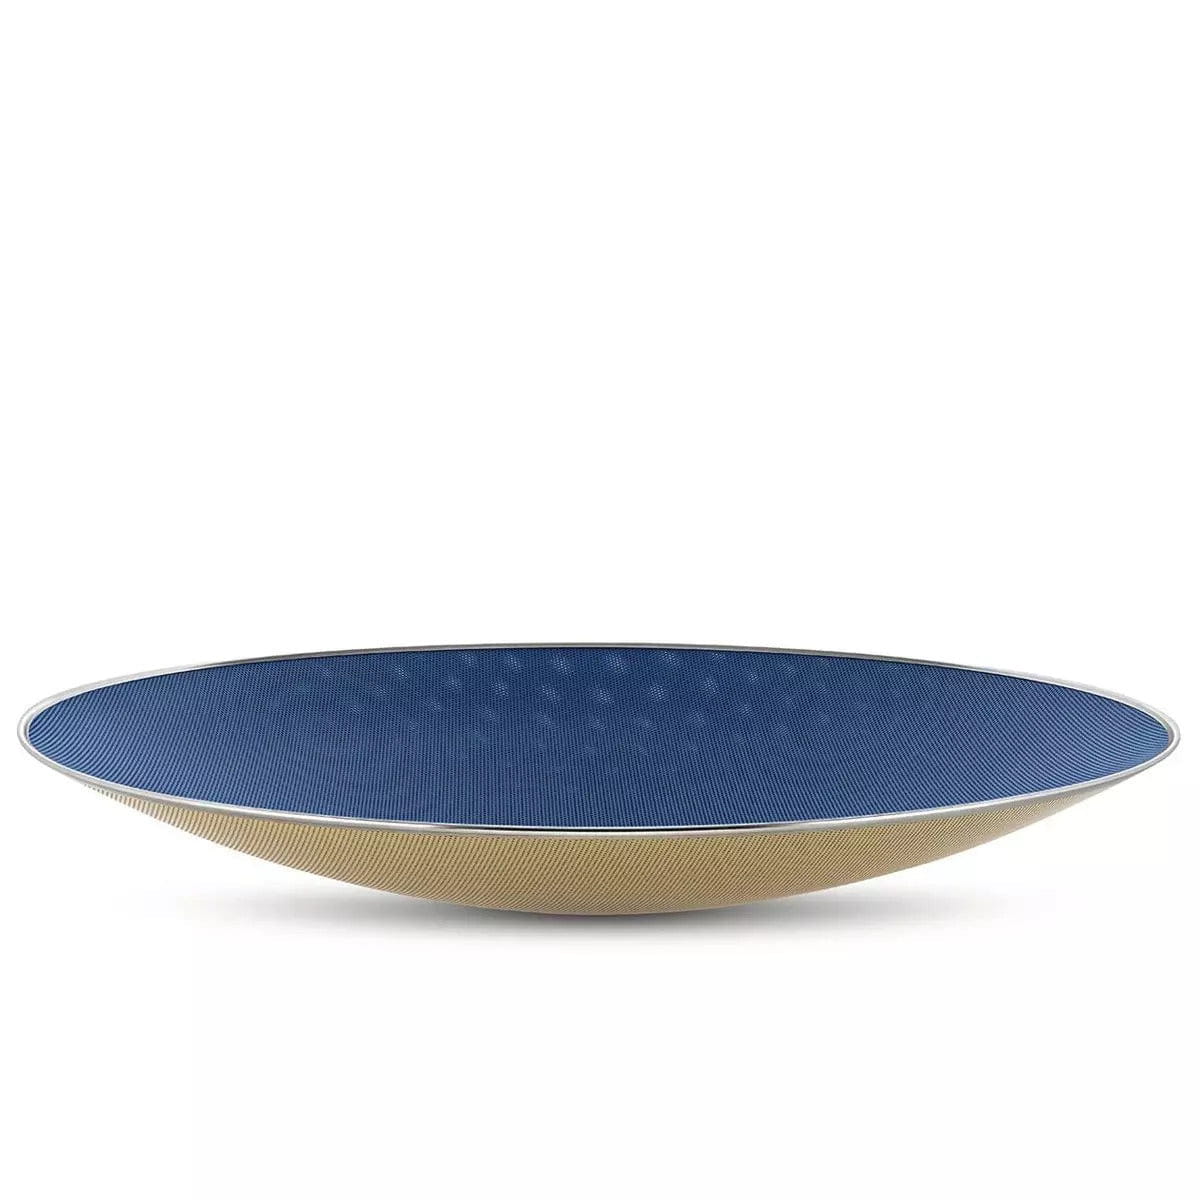 Alessi Cohncave Bowl Ø49 cm, niebieska/kości słoniowej